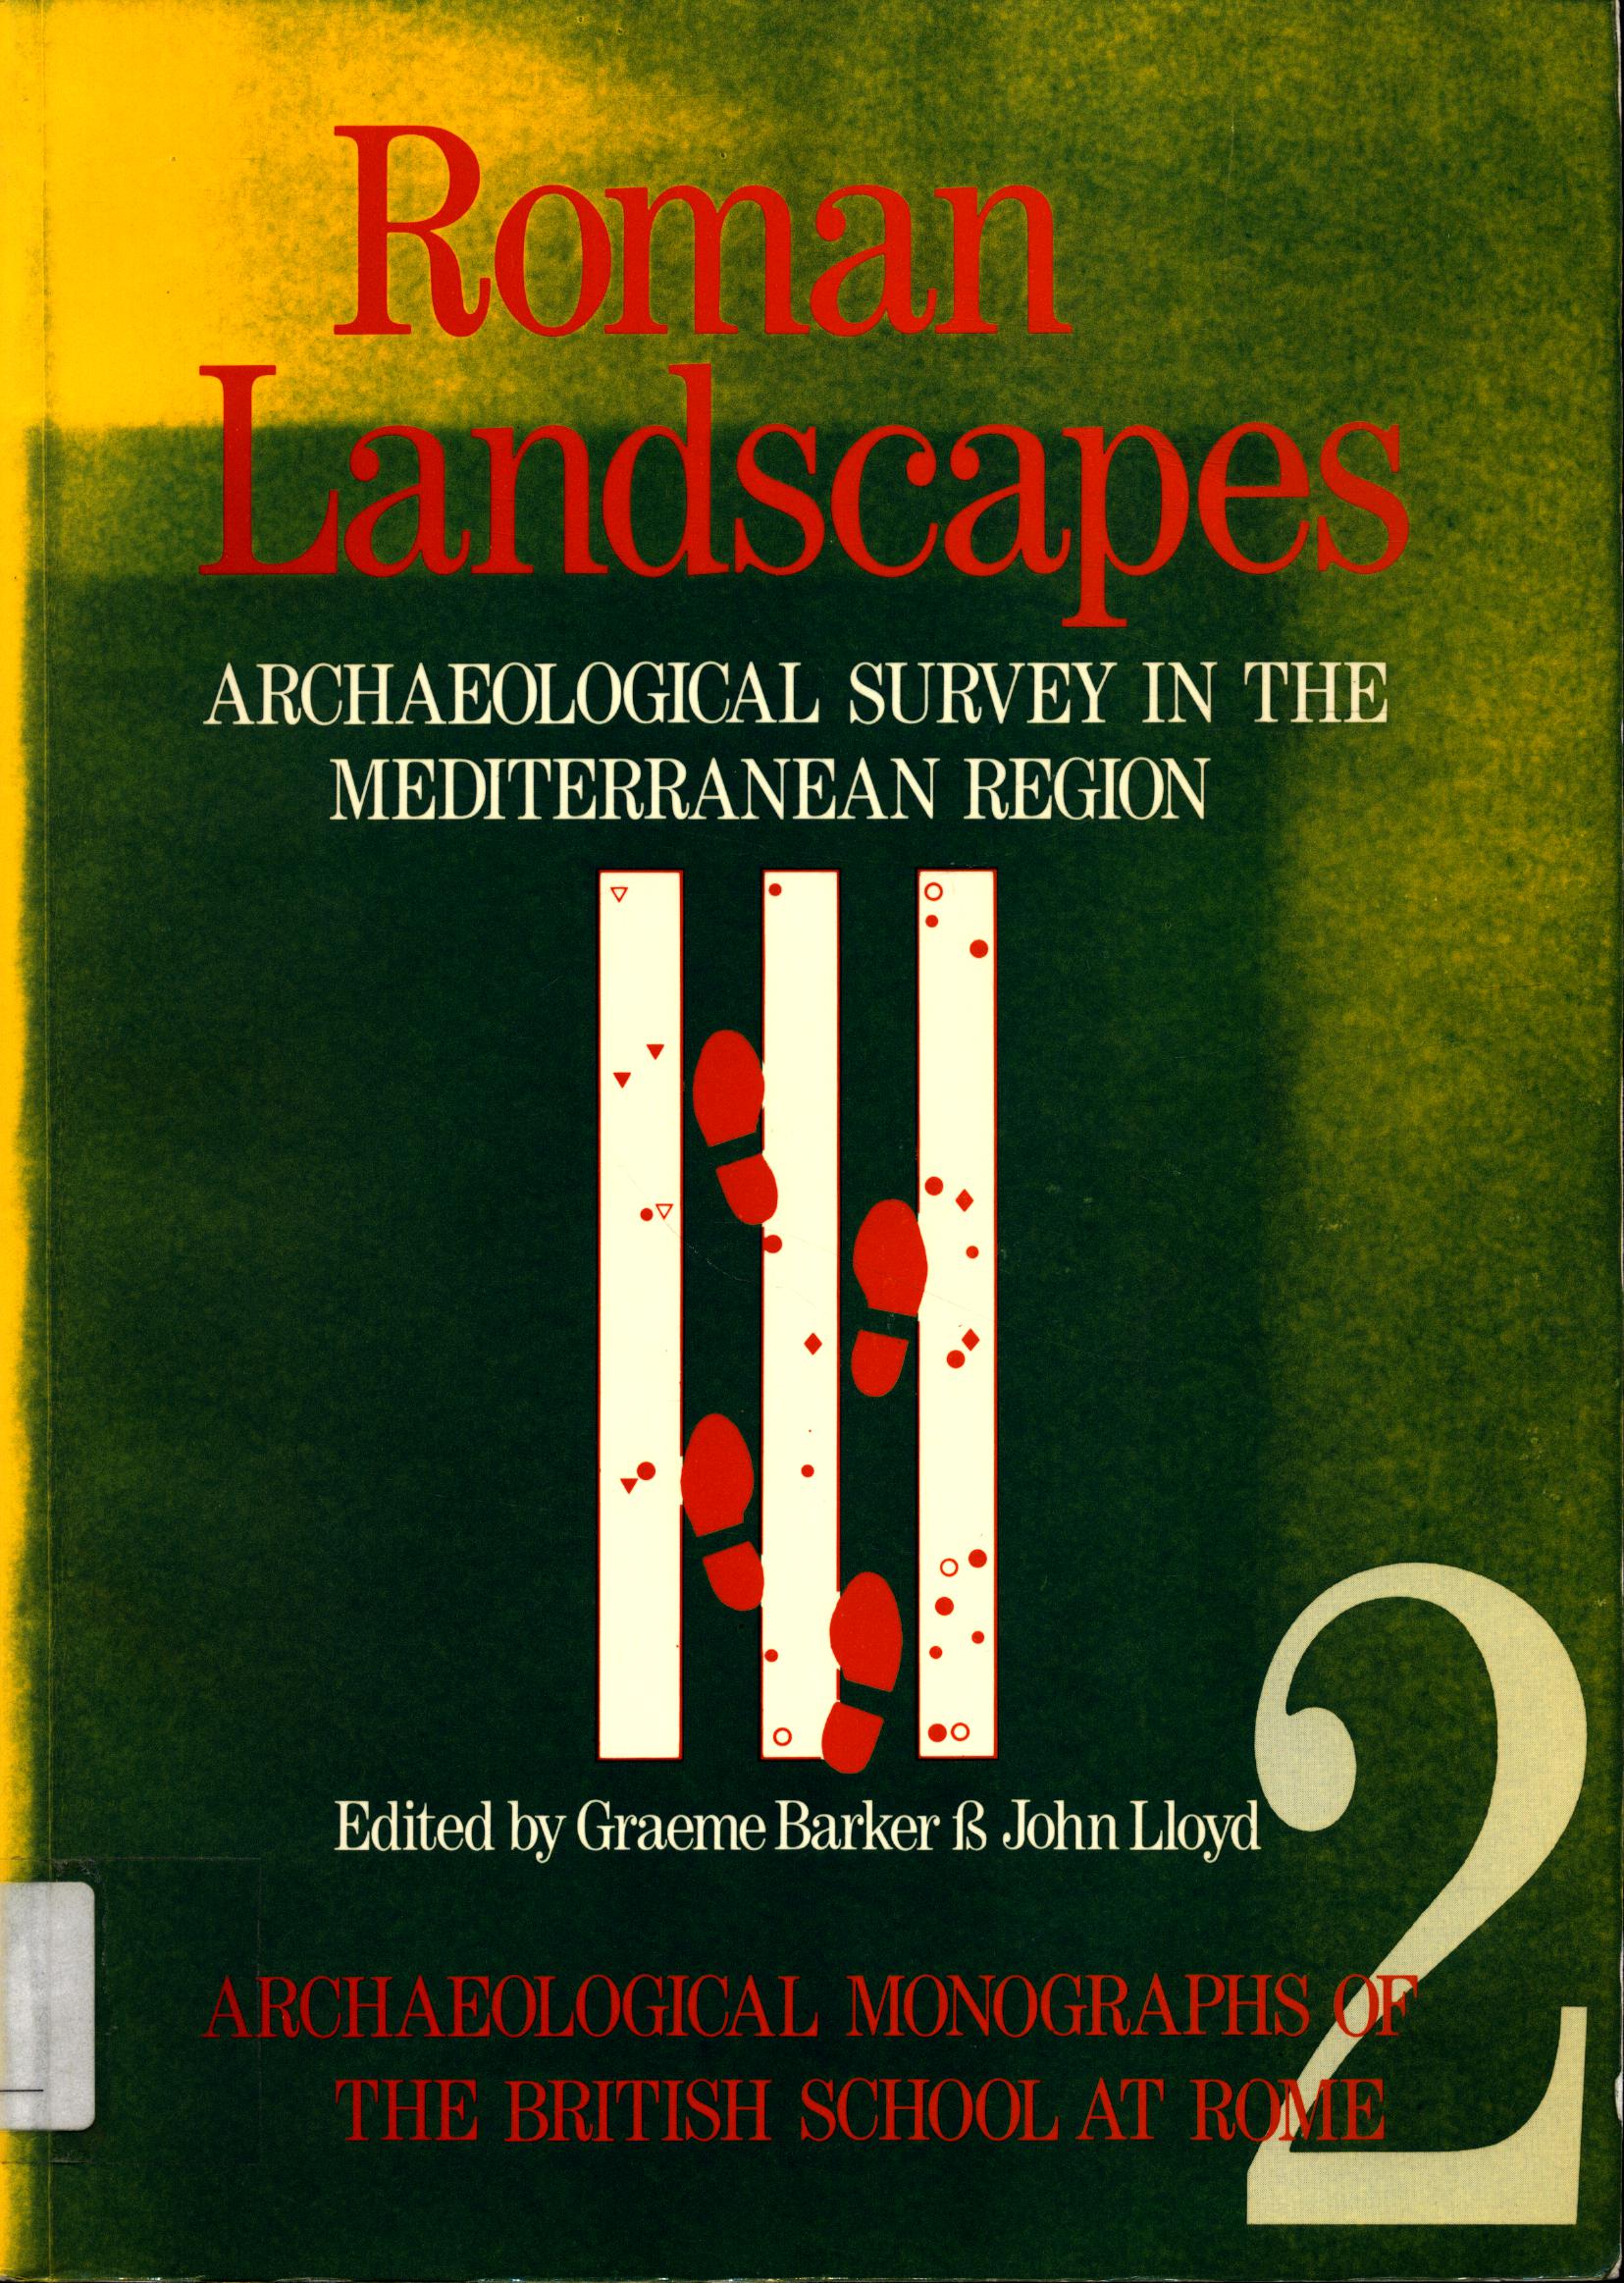 Roman Landscapes Archaeological Survey in the Mediterranean Region Archaeological Monographs of the British School at Rome No 2 - Barker, Graeme und John Lloyd